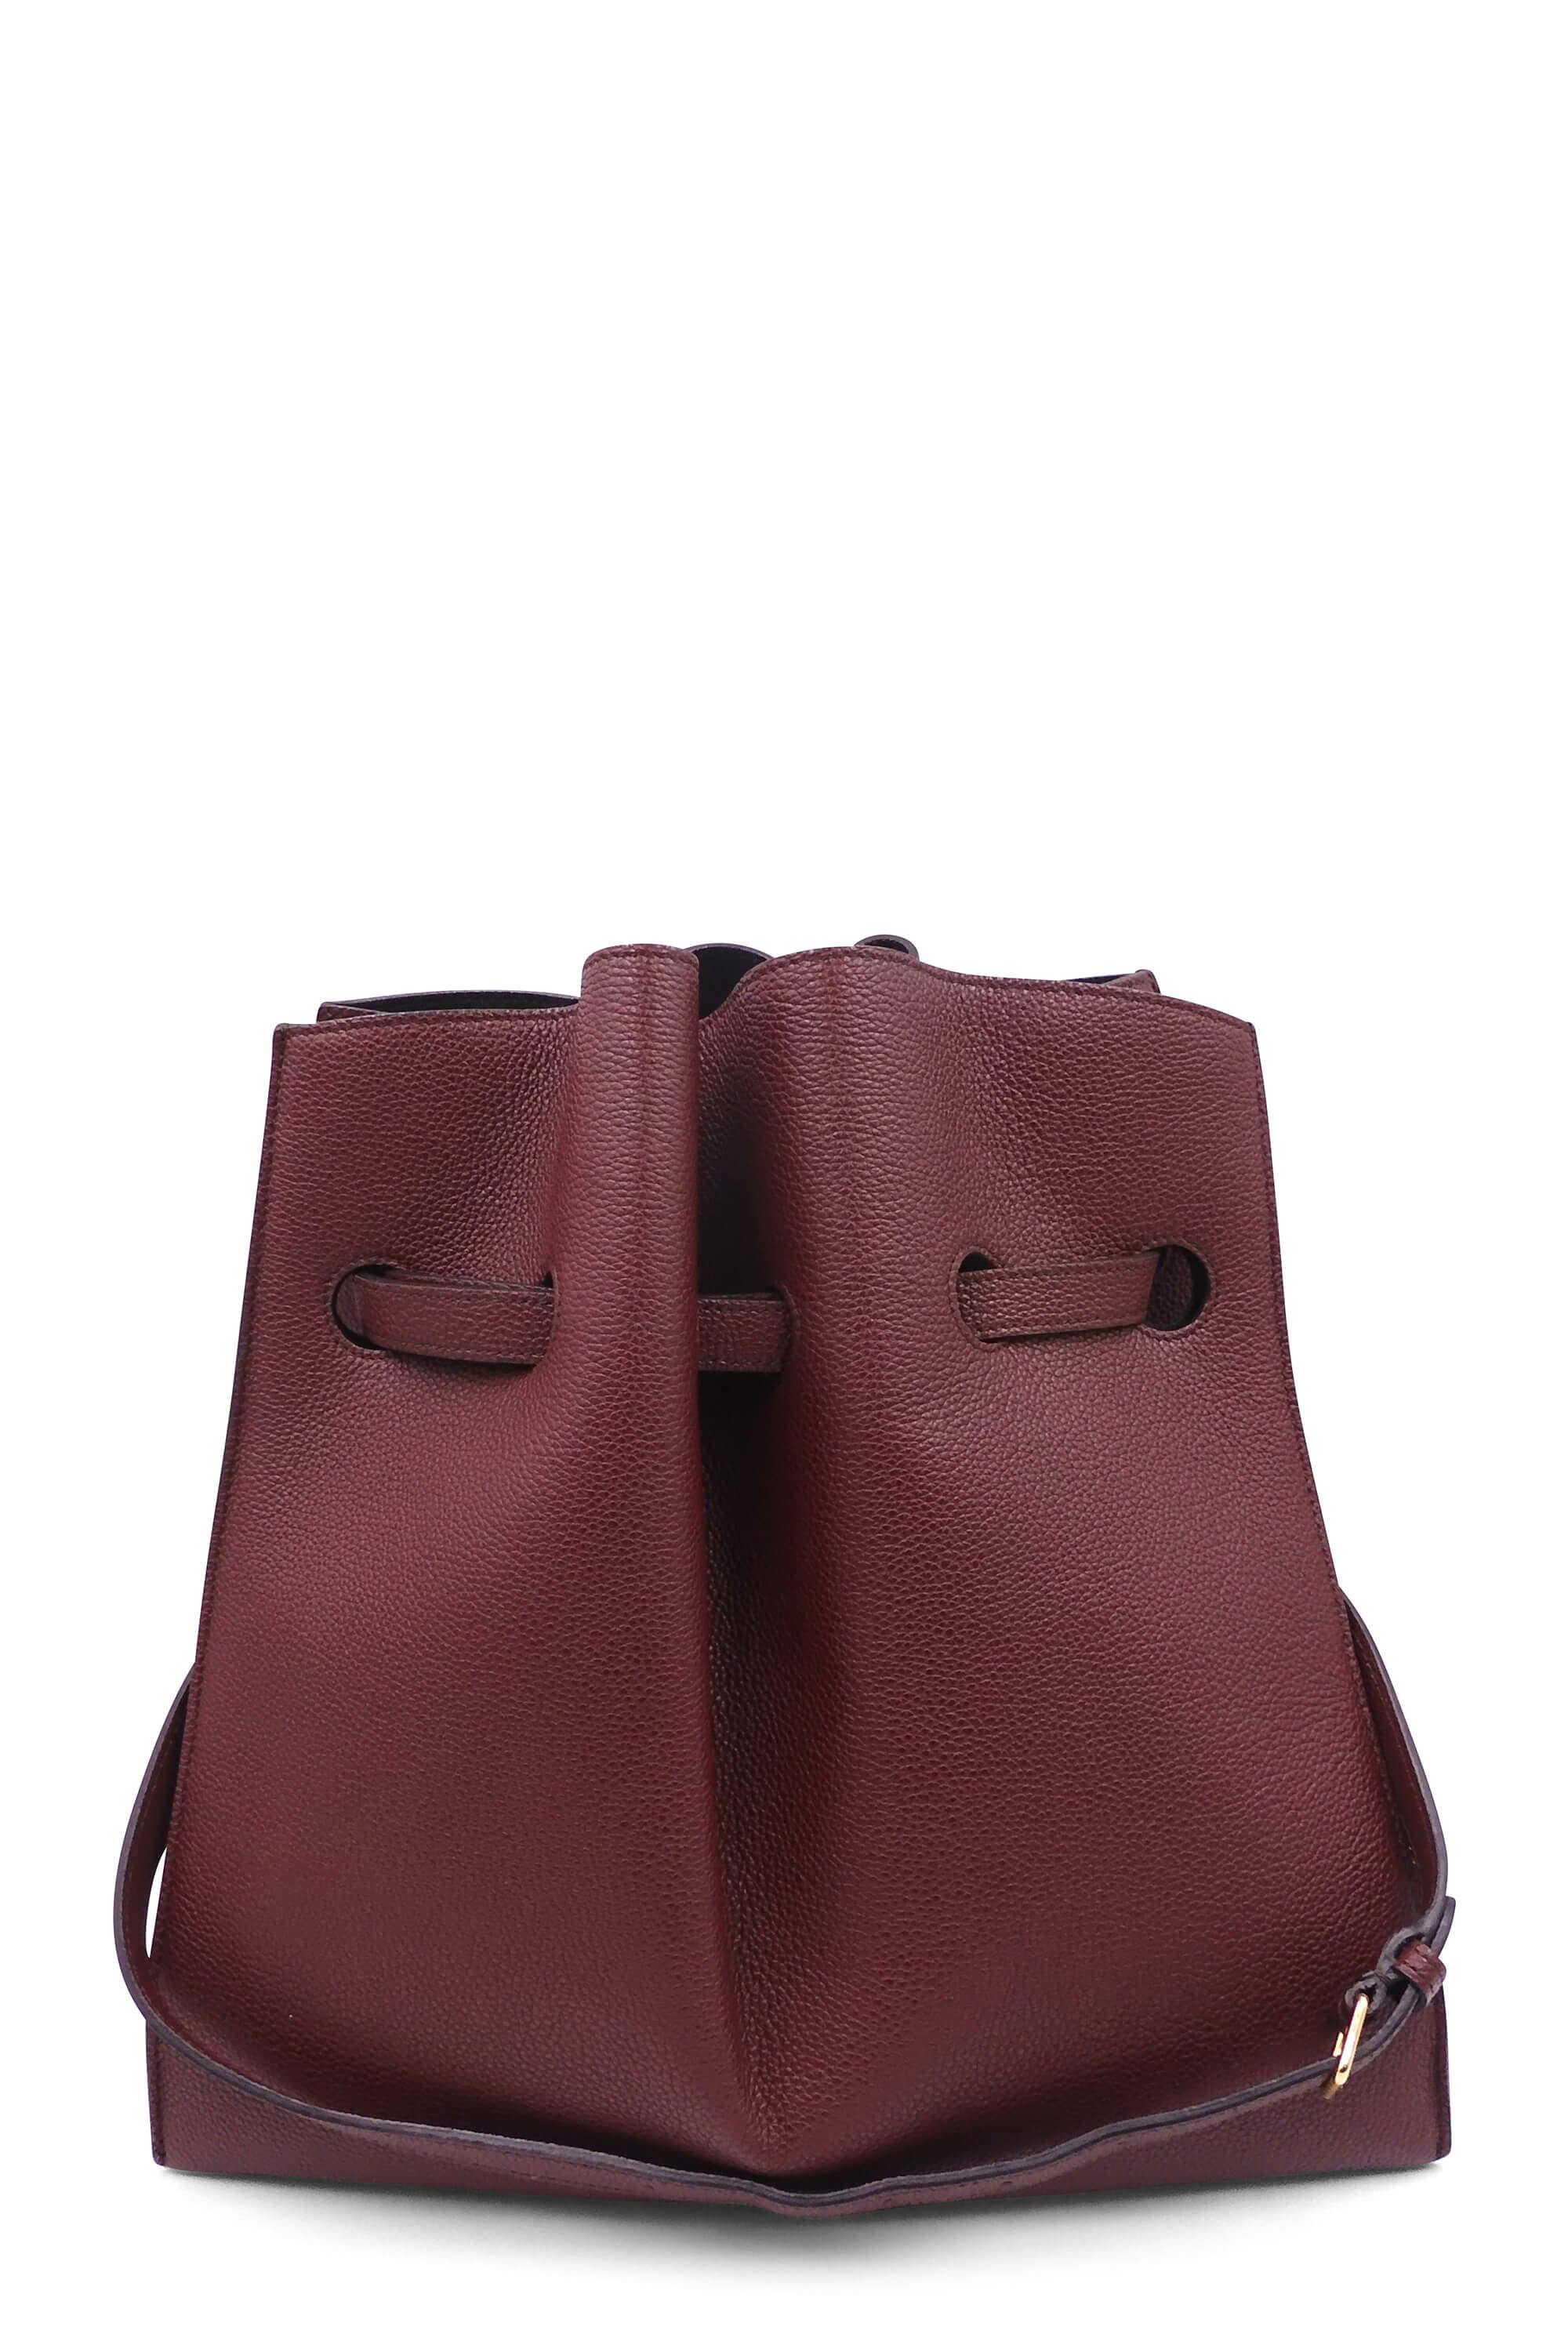 Small Soft Pebbled Real Leather Crossbody Handbags & Purses - Triple Zip  Premium Sling Crossover Shoulder Bag for Women Pack of 2 - Beige & Burgundy  Color: Handbags: Amazon.com